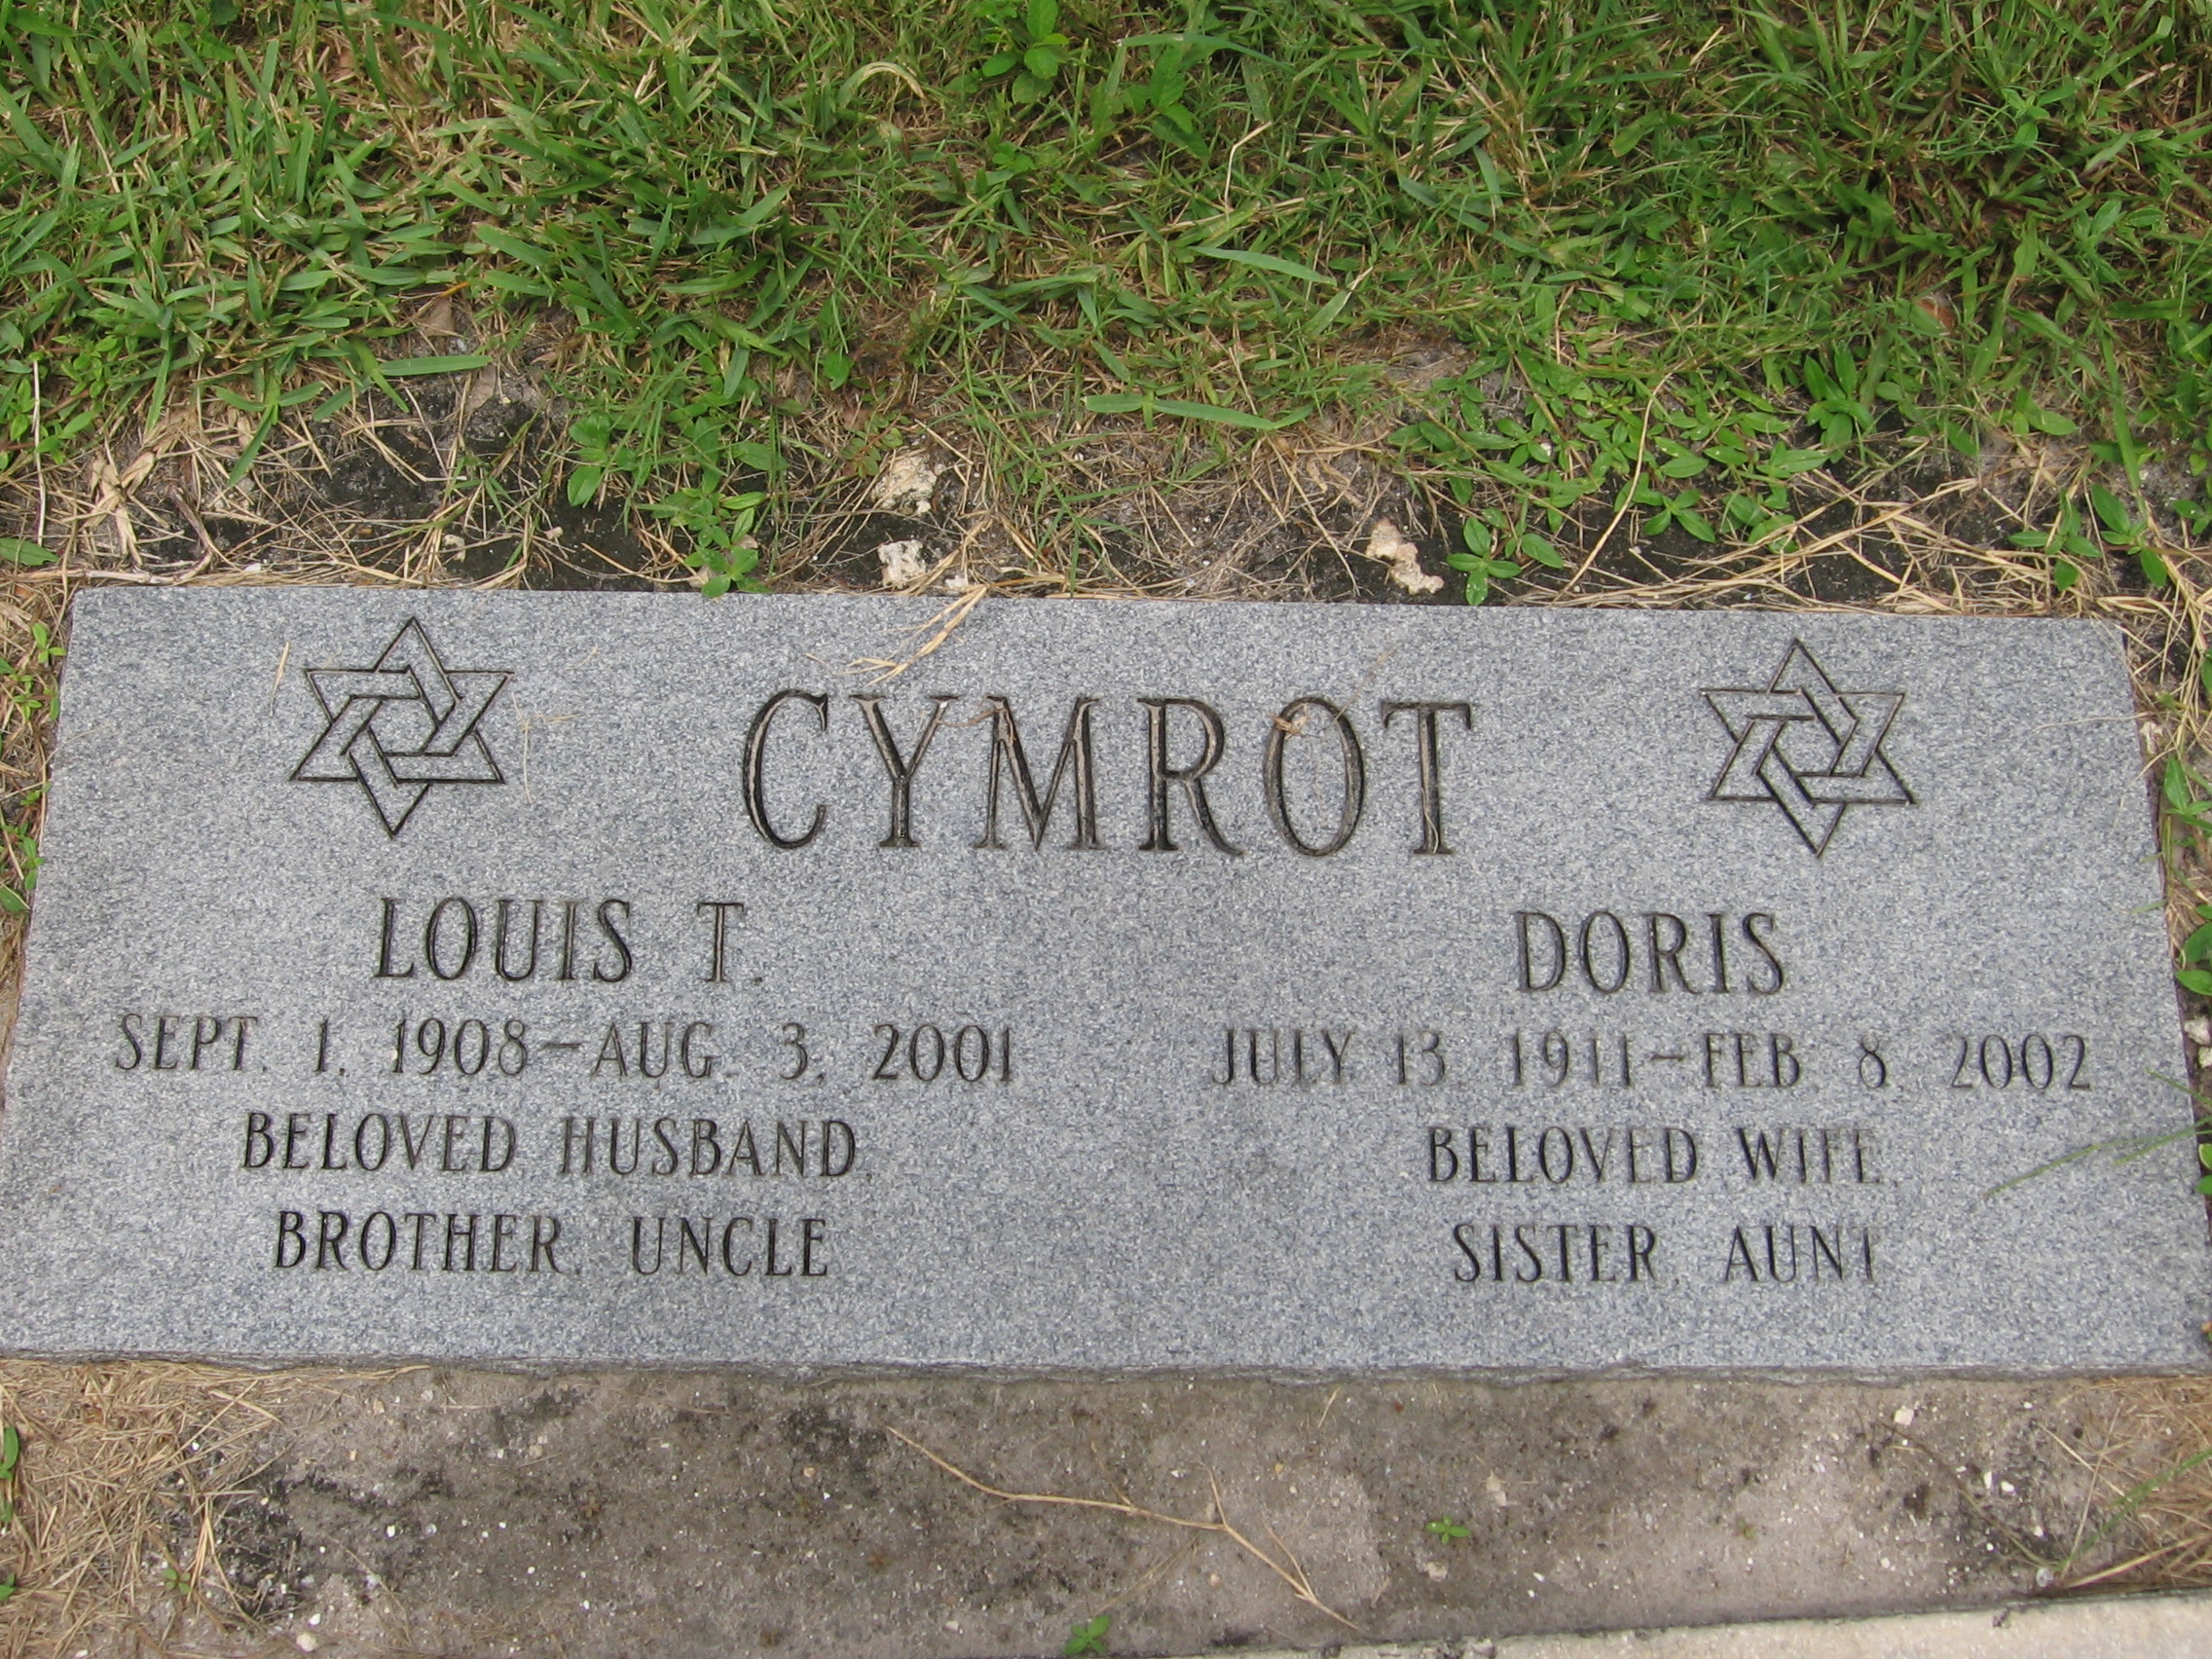 Doris Cymrot